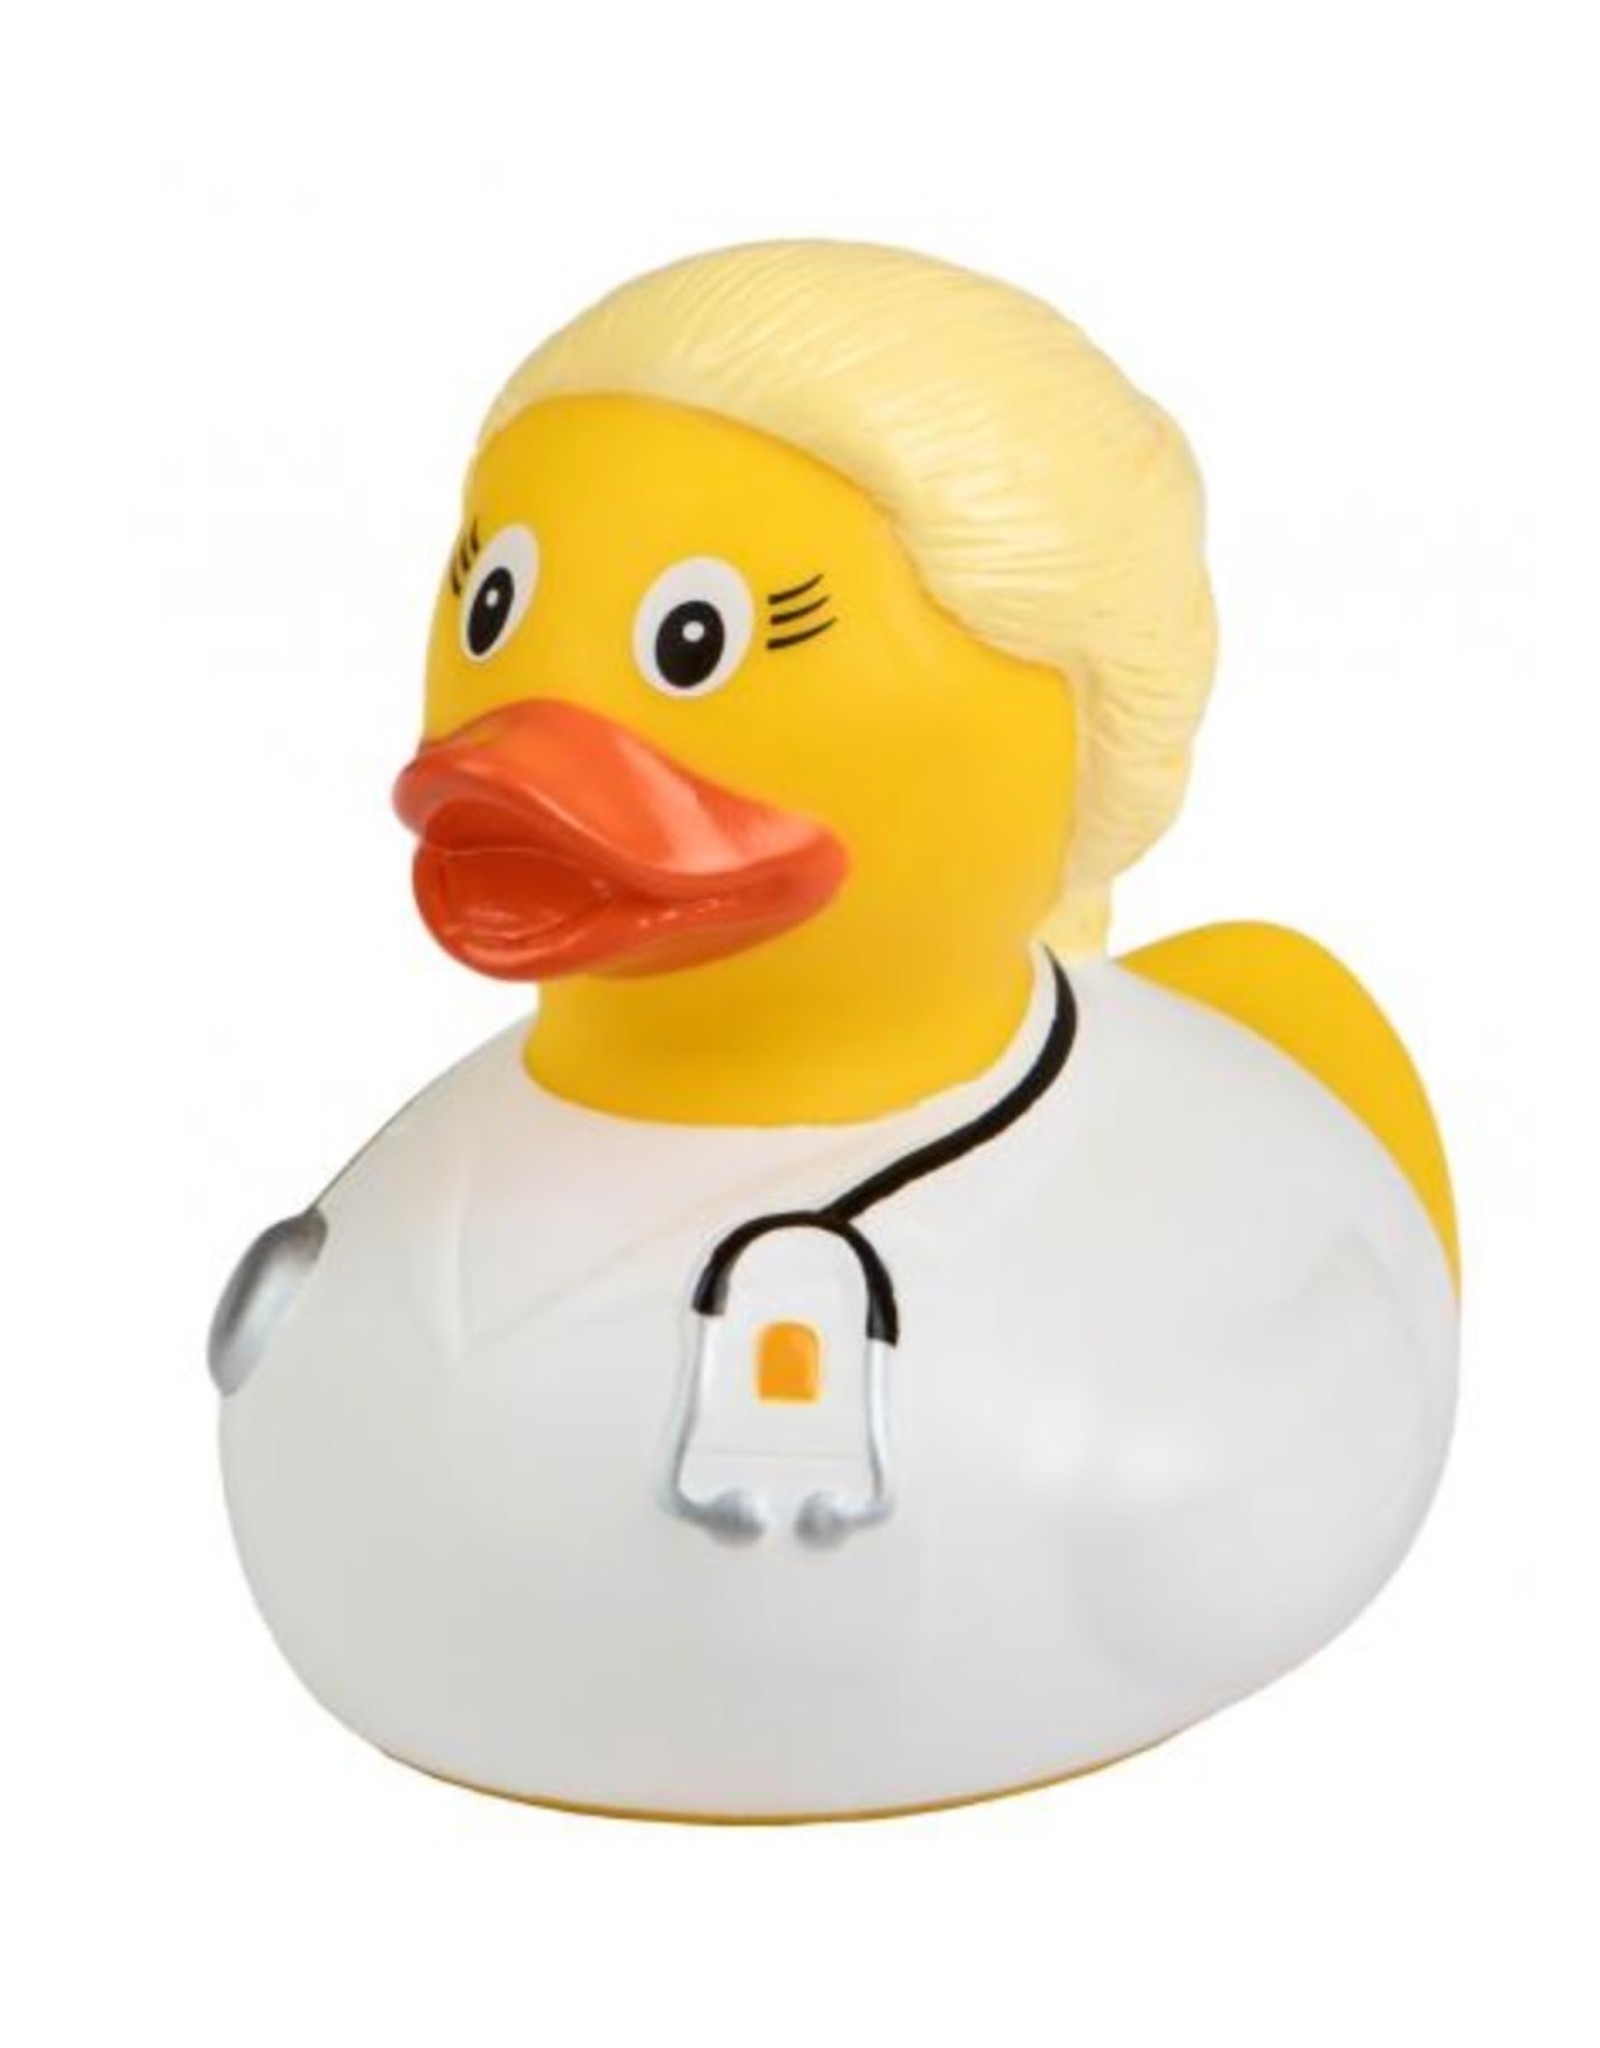 Blonde Doctor Rubber Duck